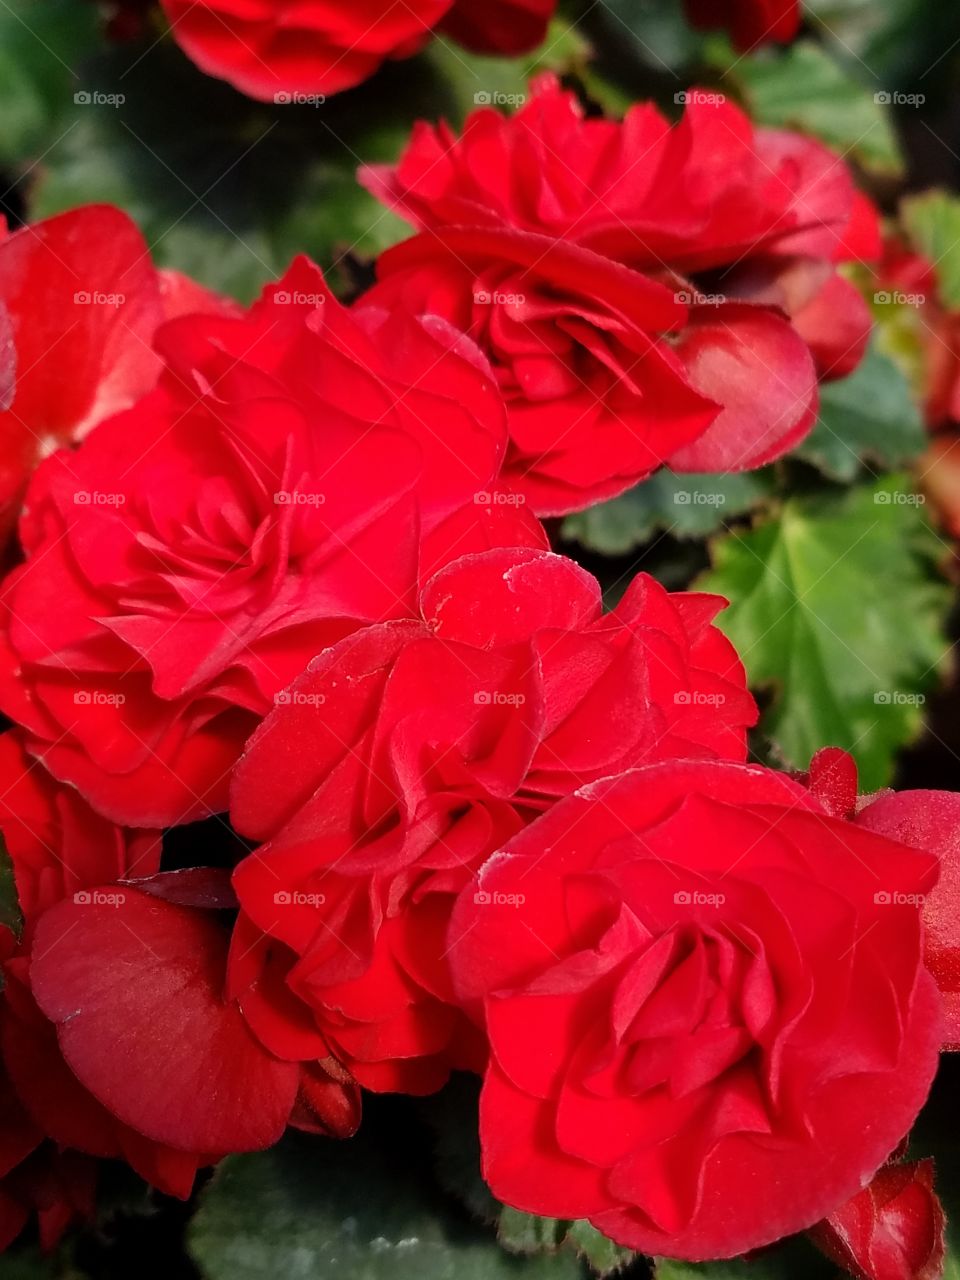 flowers of red rose begonia